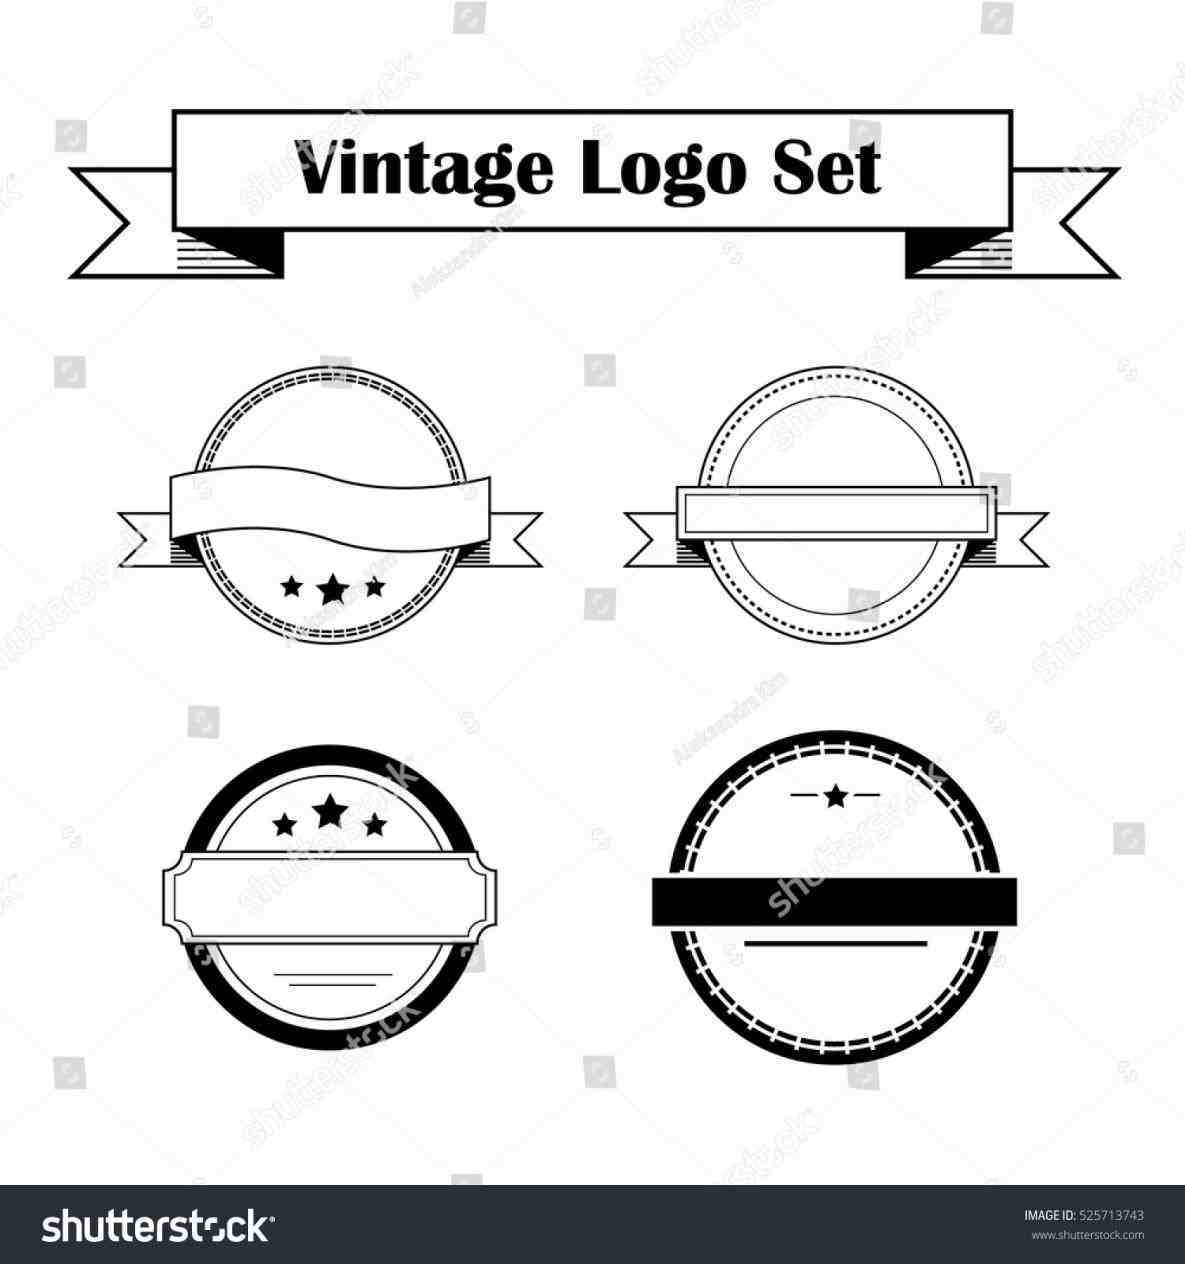 Blank Round Stamp Logo - empty logo template.fontanacountryinn.com